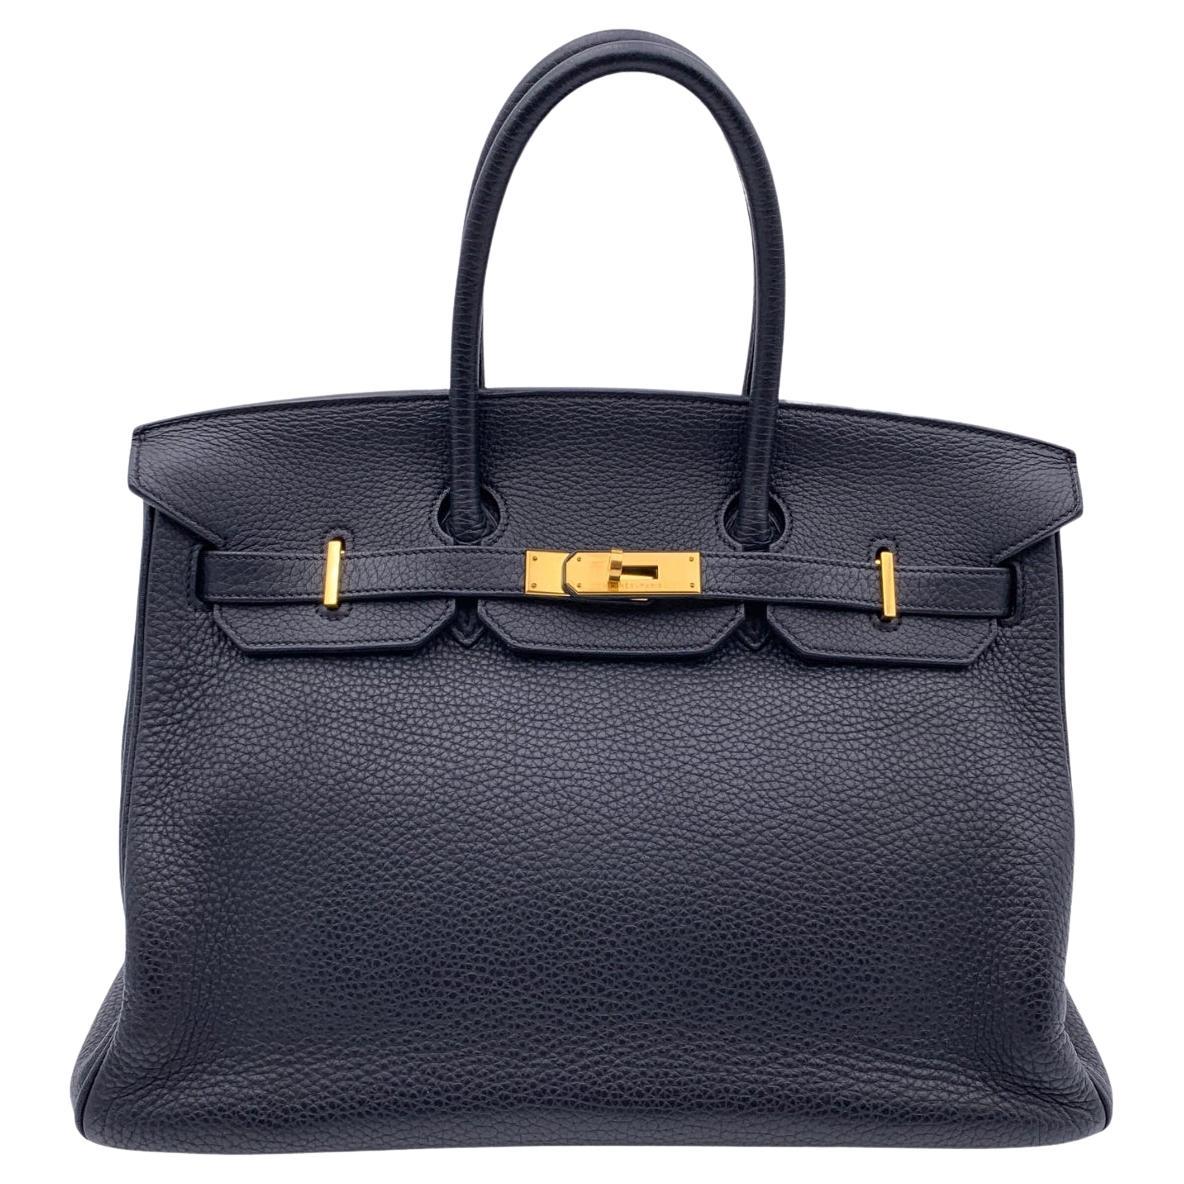 Hermes Black Clemence Leather Birkin 35 Top Handle Bag Satchel Handbag